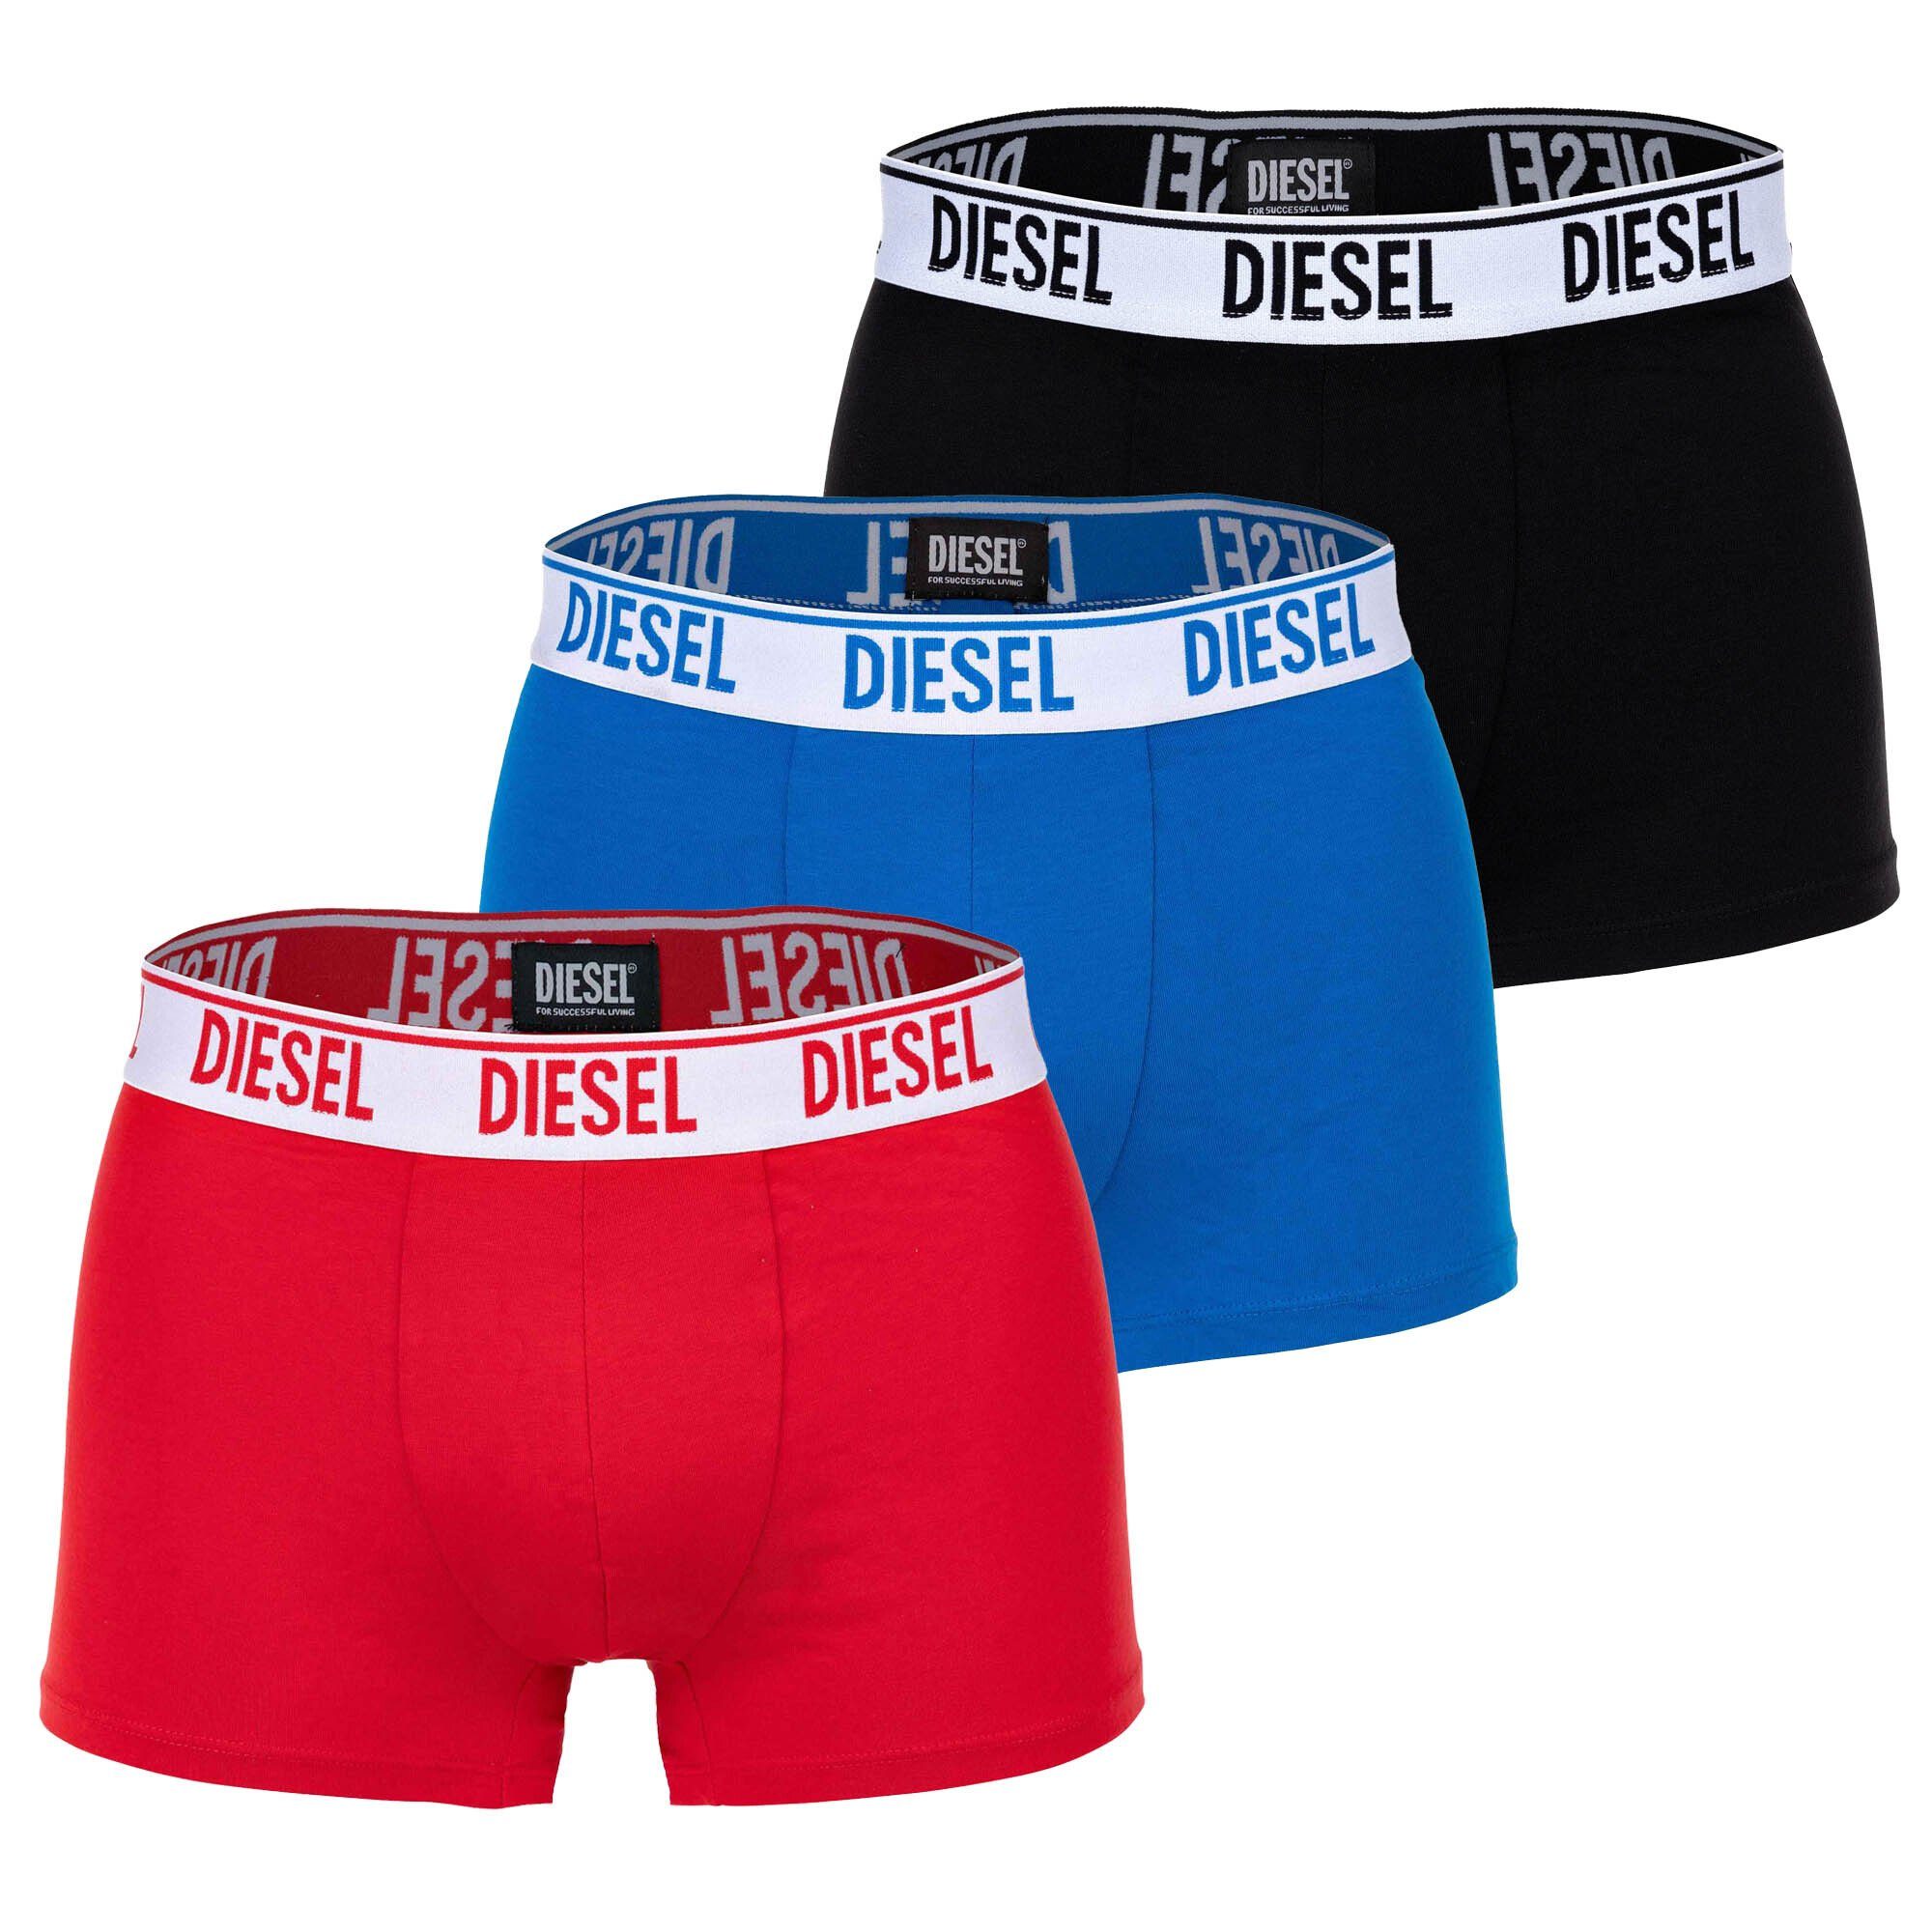 Diesel Boxer Herren Boxershorts, 3er Pack - Dunkelblau/Blau/Rot | Boxershorts